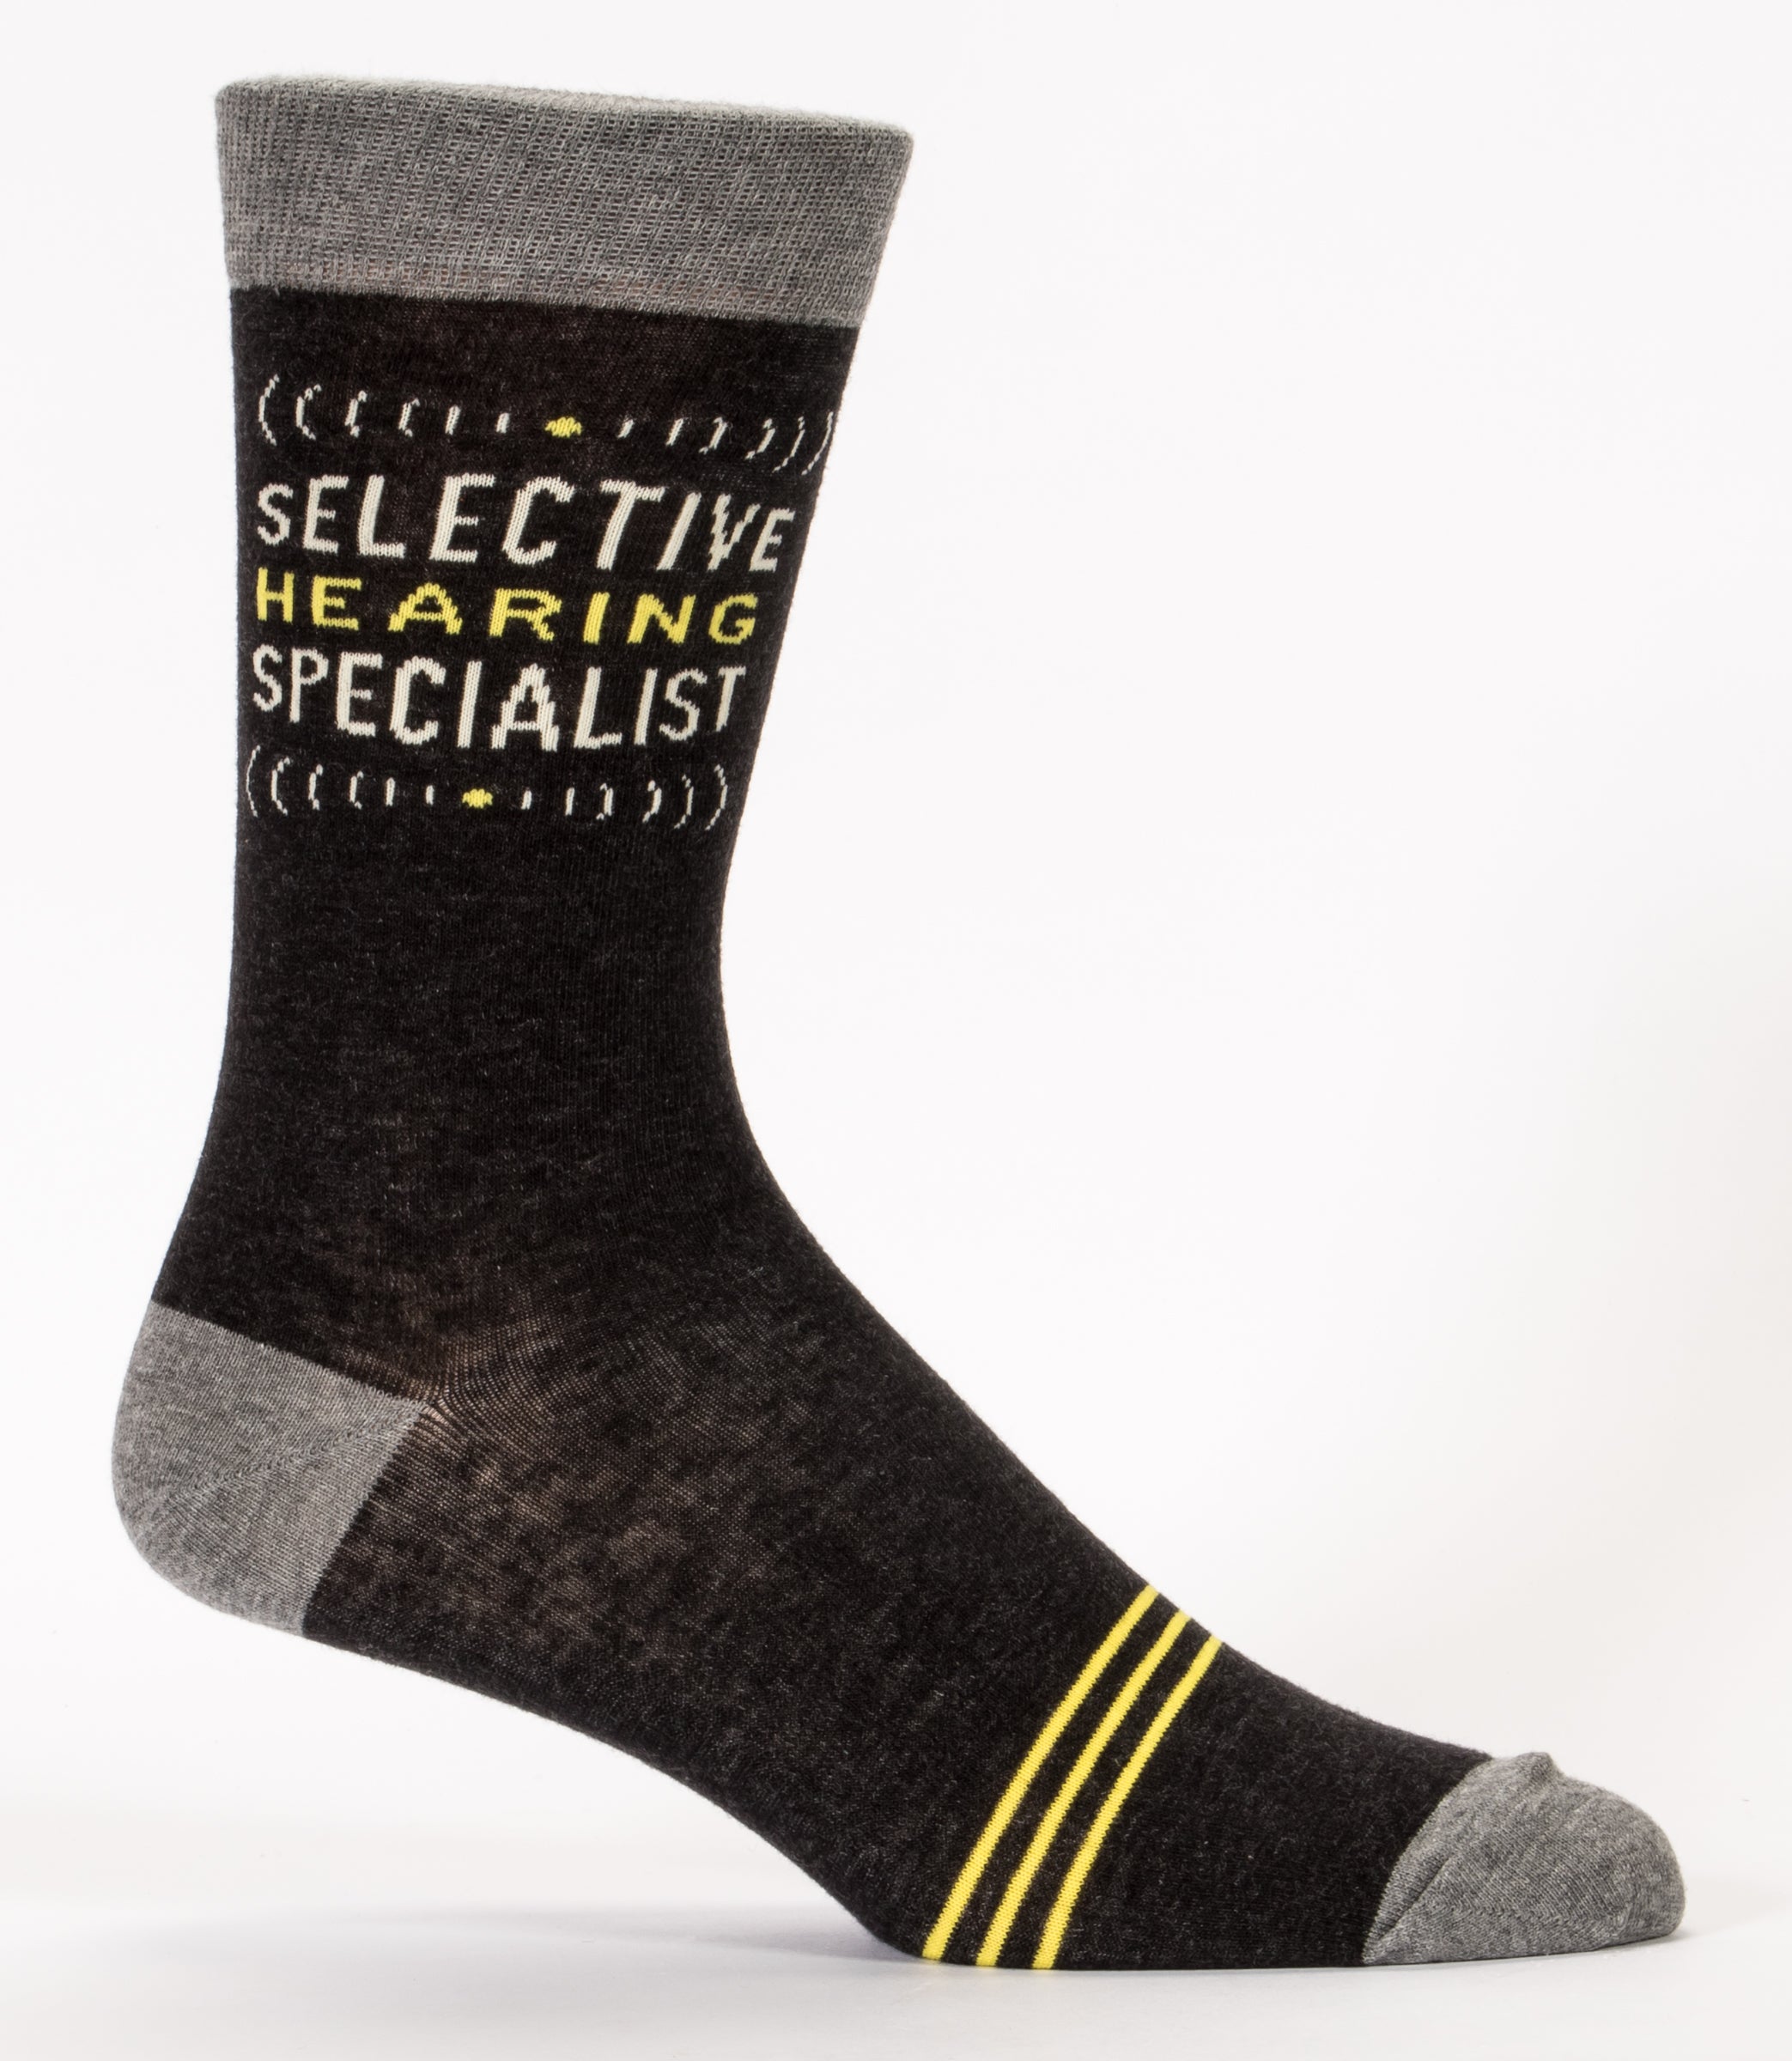 BlueQ Men's Crew Socks: Selective Hearing Specialist